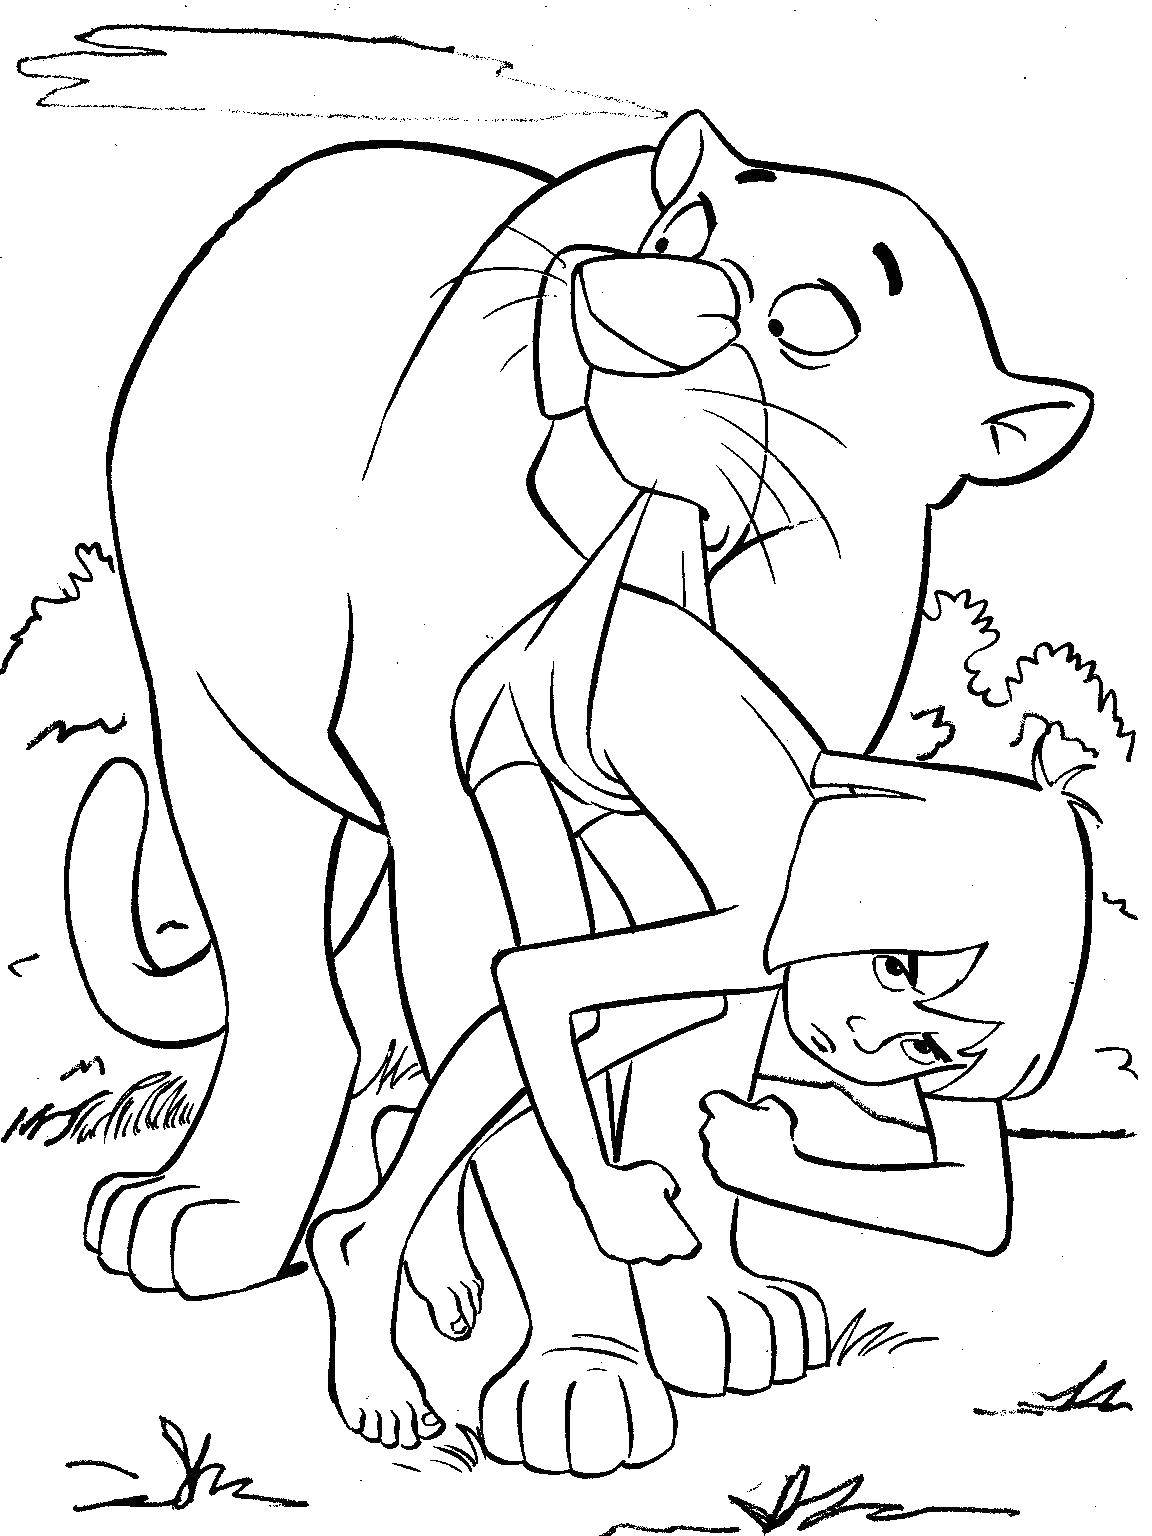 Coloring Mowgli with a lioness. Category Mowgli. Tags:  cartoon, Mowgli, lioness.